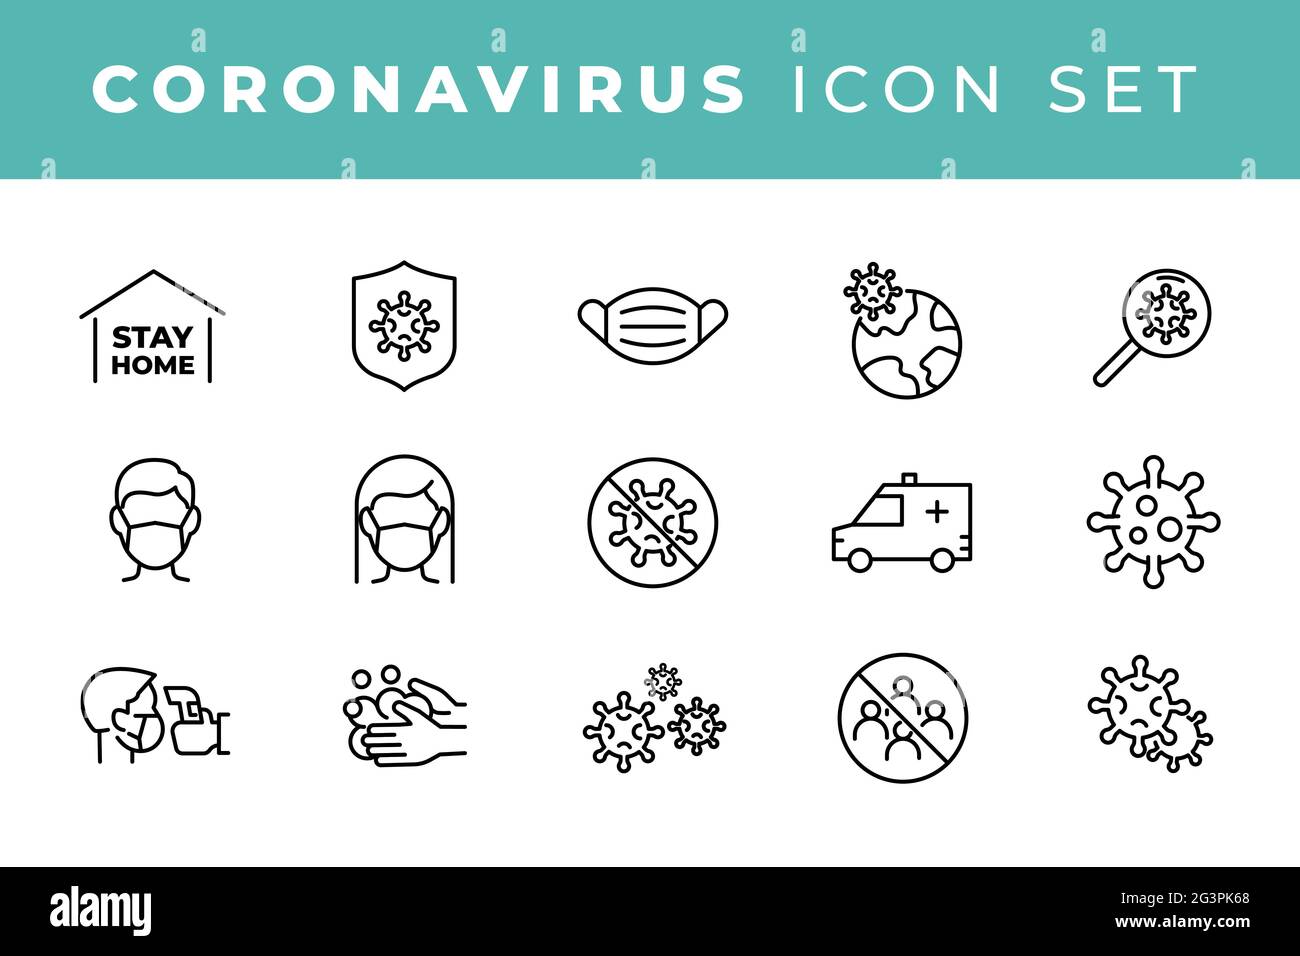 Coronavirus-Symbolsatz für Infografik oder Website. Neuartiges Coronavirus 2019-nCoV. 2019 und 2020 Epidemie Stock Vektor